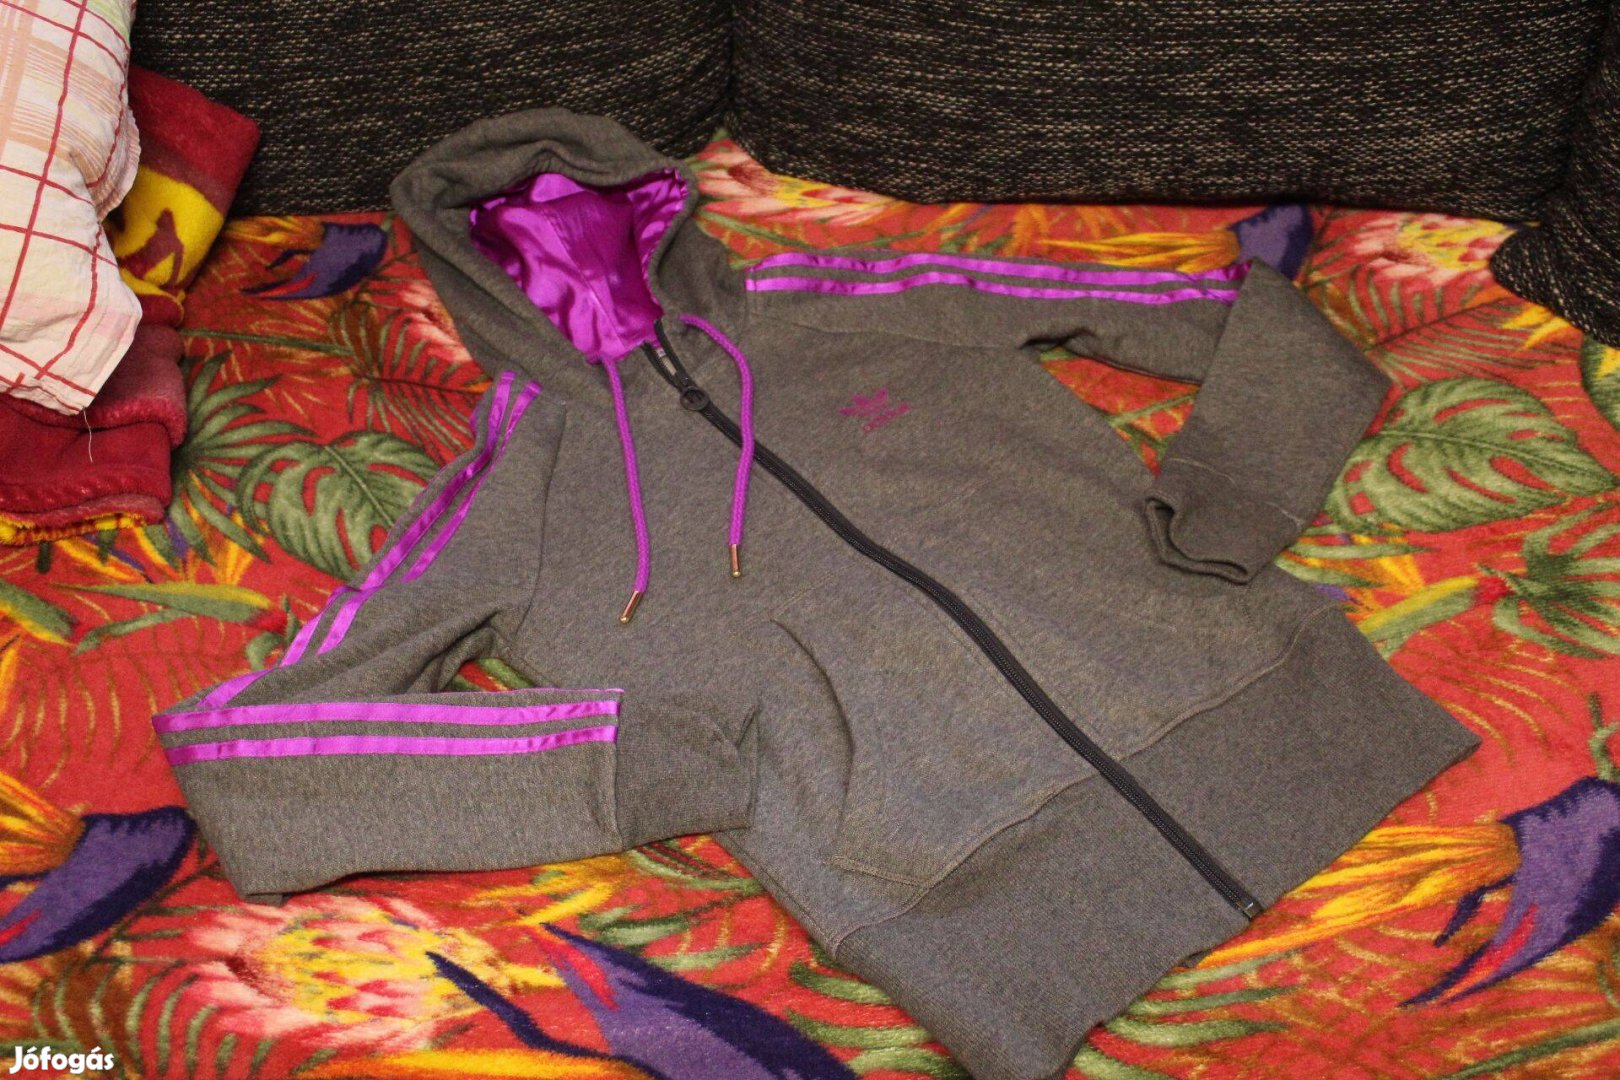 Szurke alapon lila csikos Adidas pulover, S/M meret